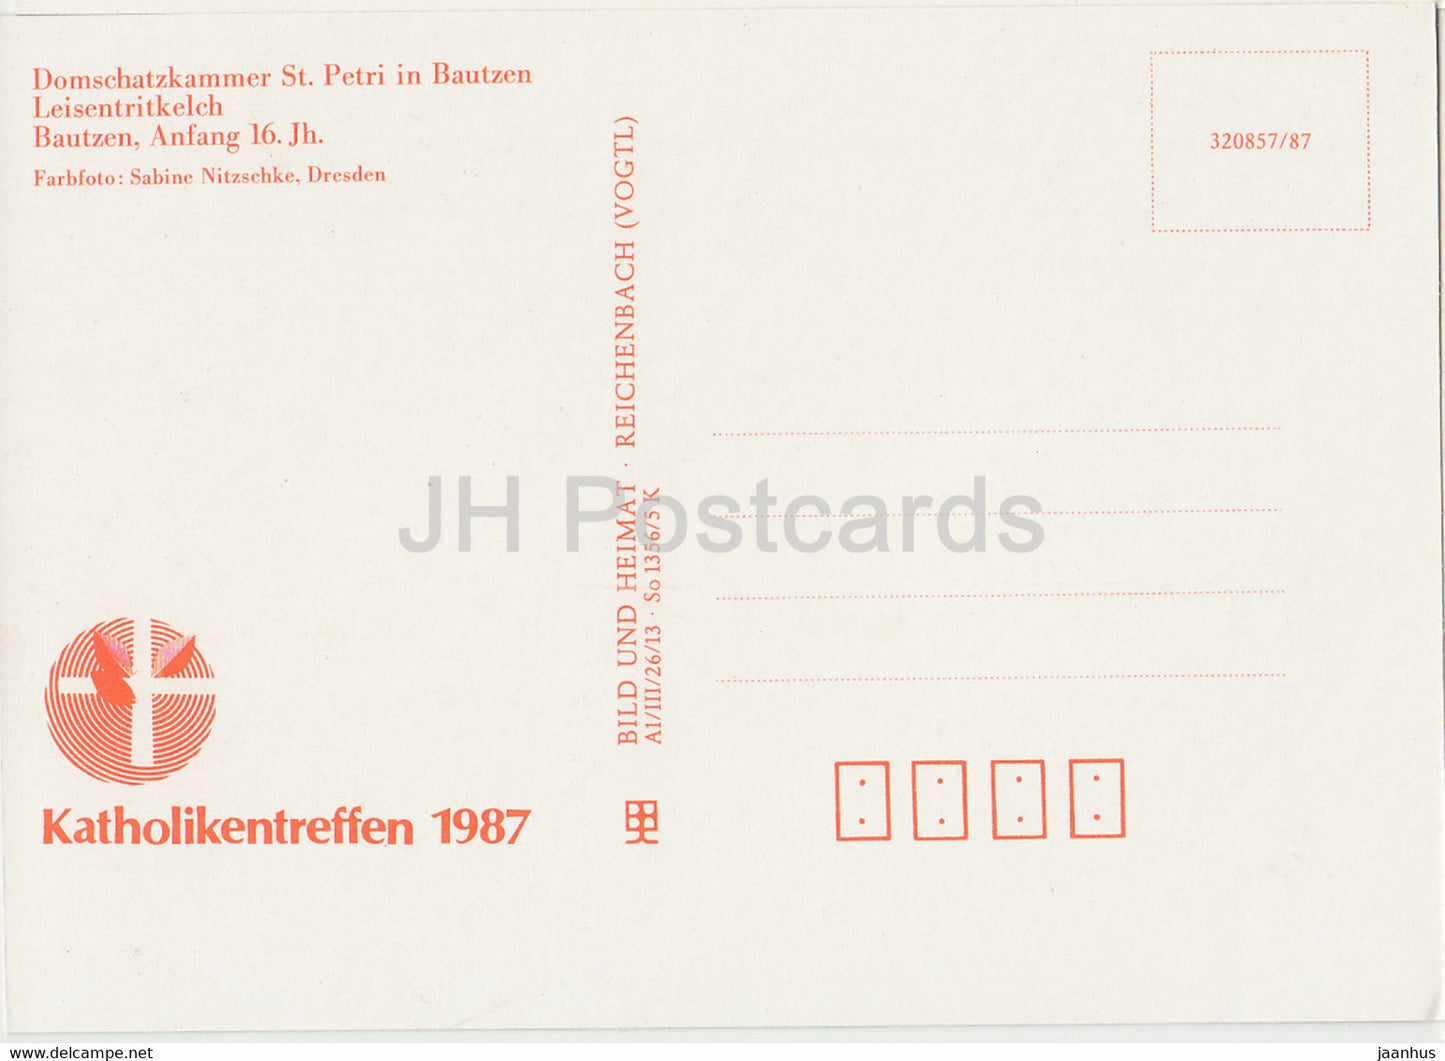 Leisentritkelch - calice - Domschatzkammer St Petri à Bautzen - 1987 - DDR Allemagne - inutilisé